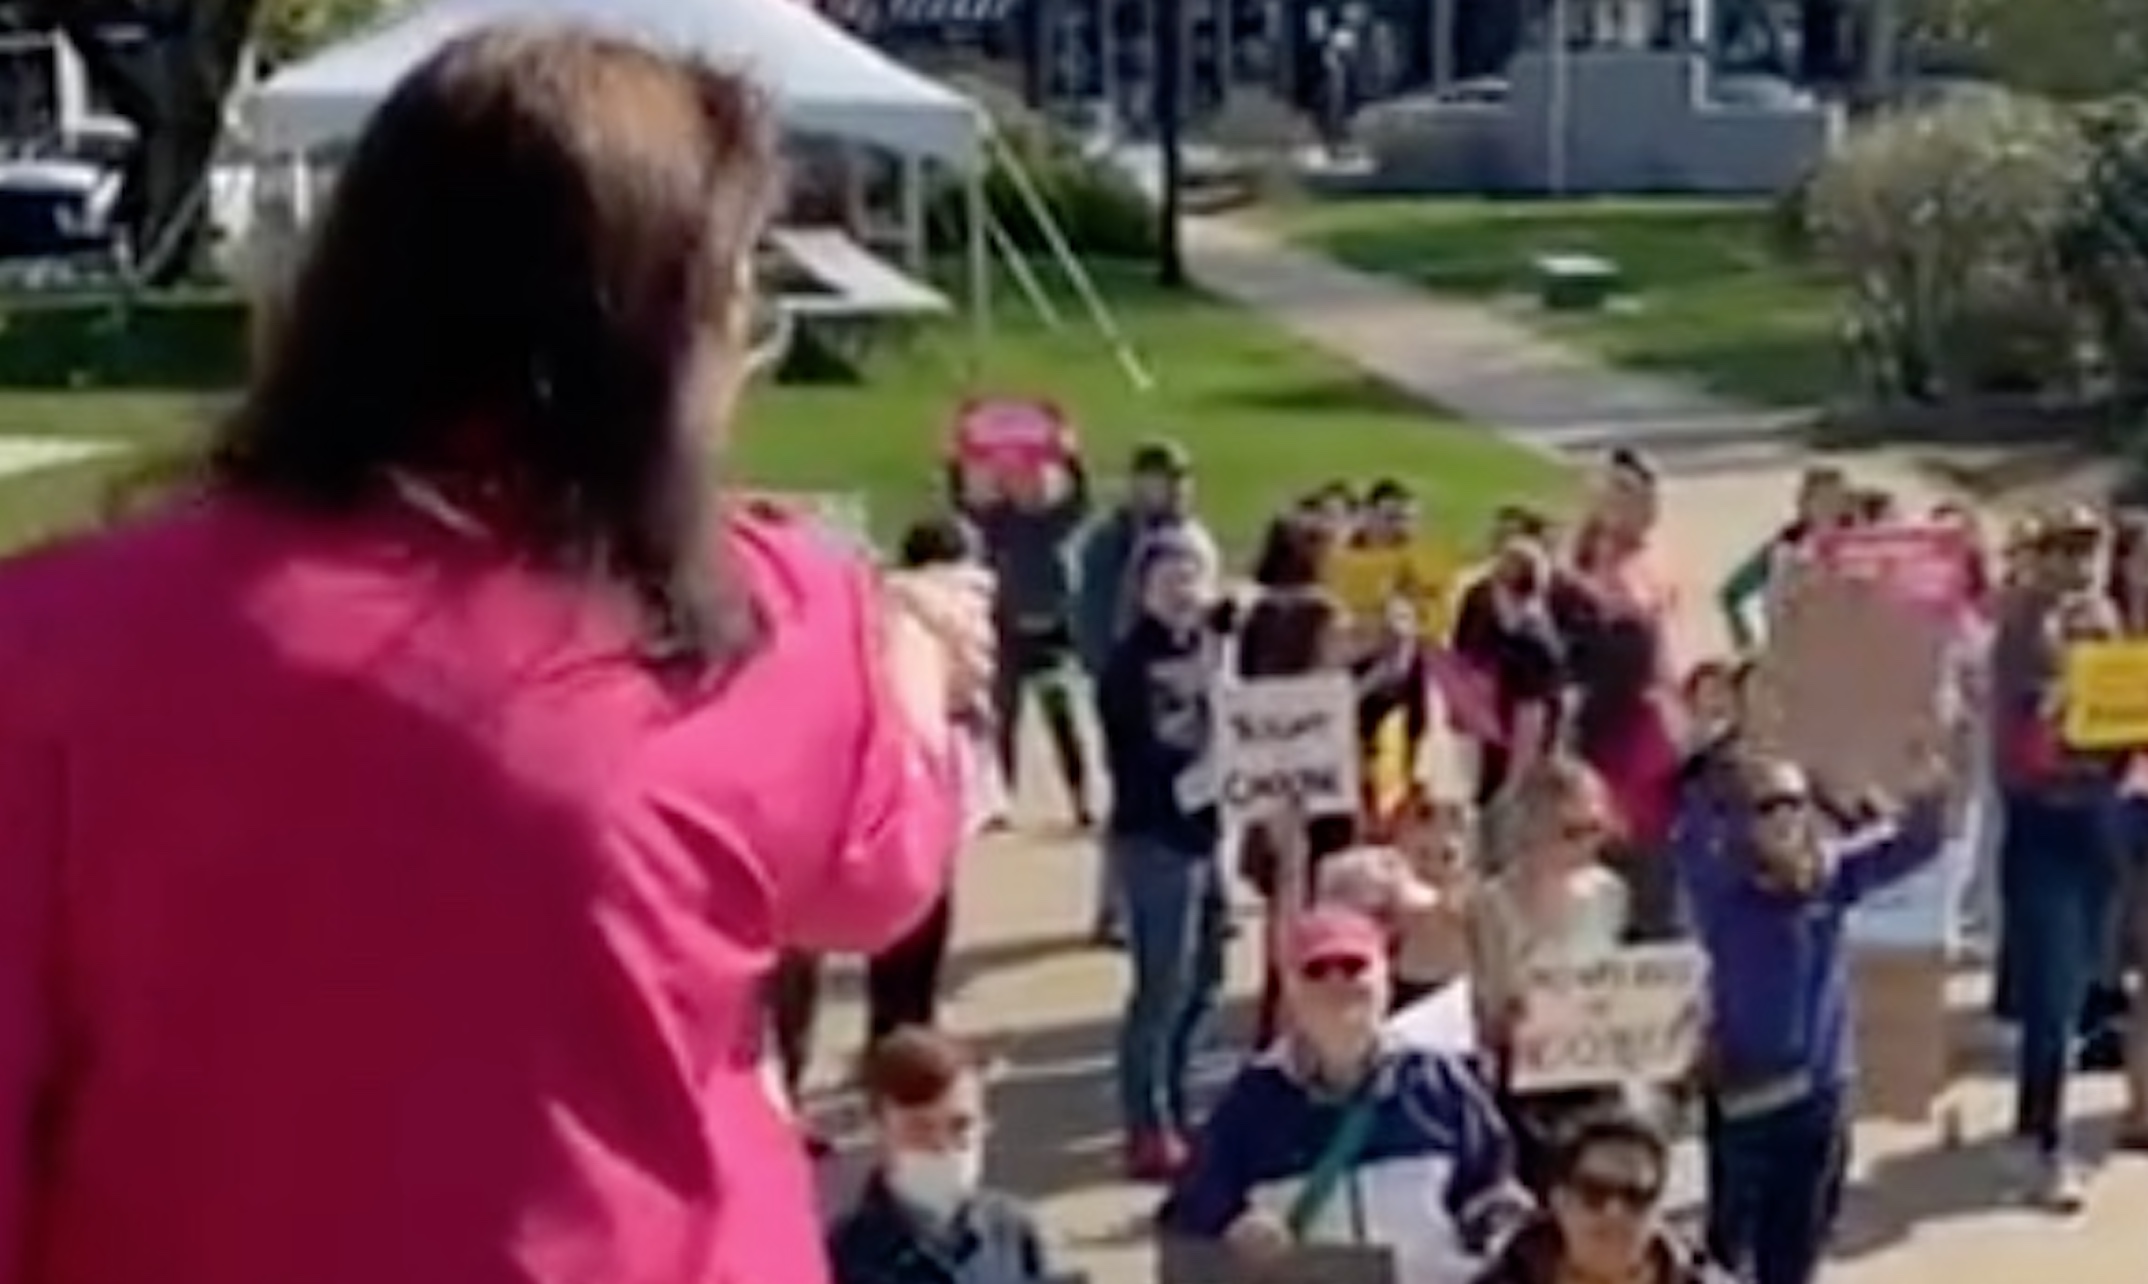 Susan DeLemus yells at protesters